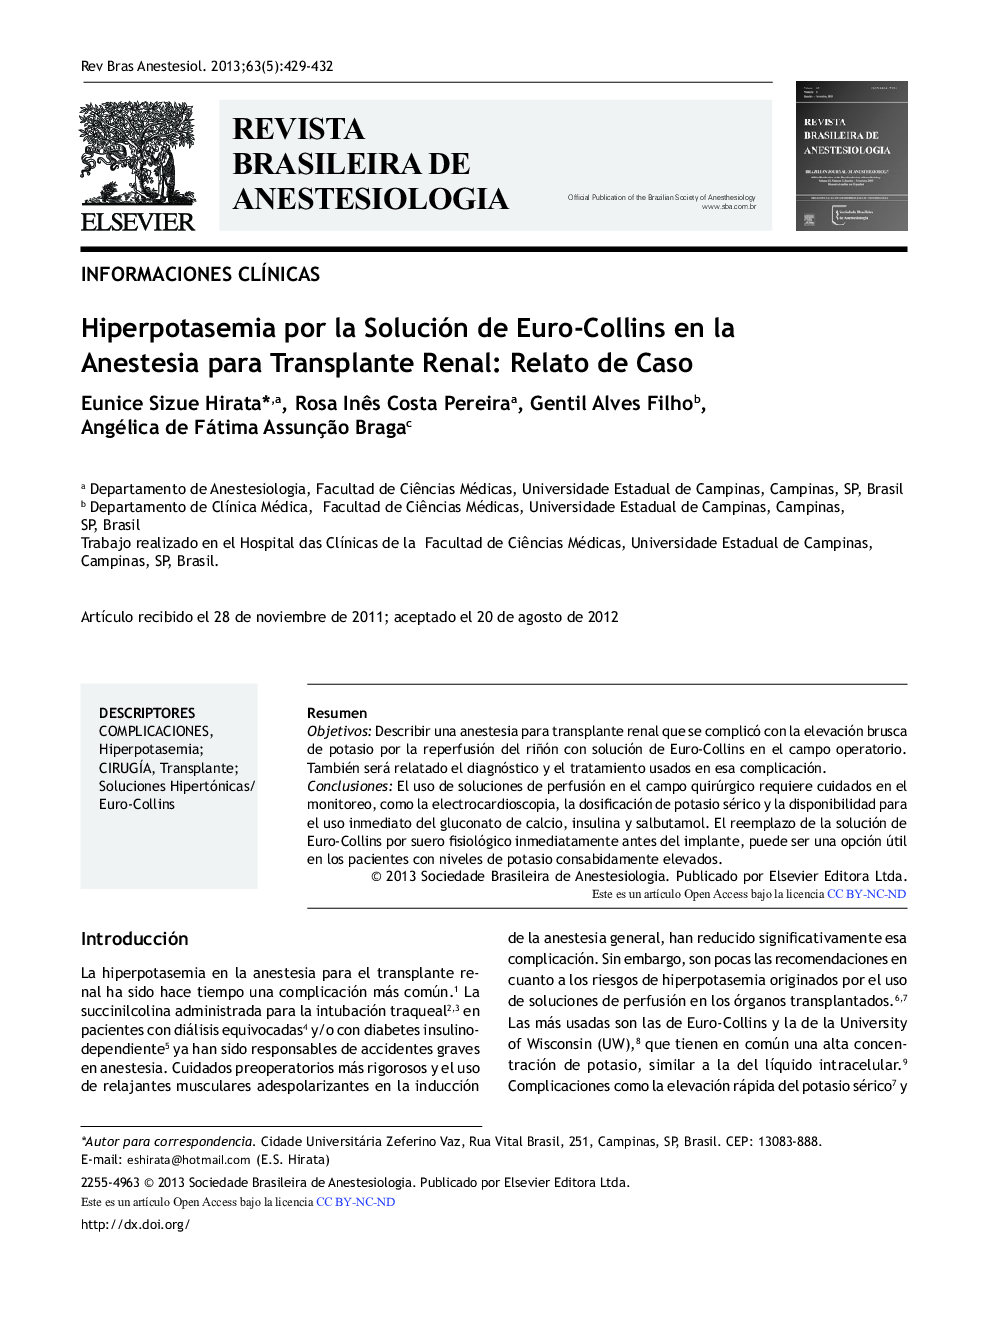 Hiperpotasemia por la Solución de Euro-Collins en la Anestesia para Transplante Renal: Relato de Caso 